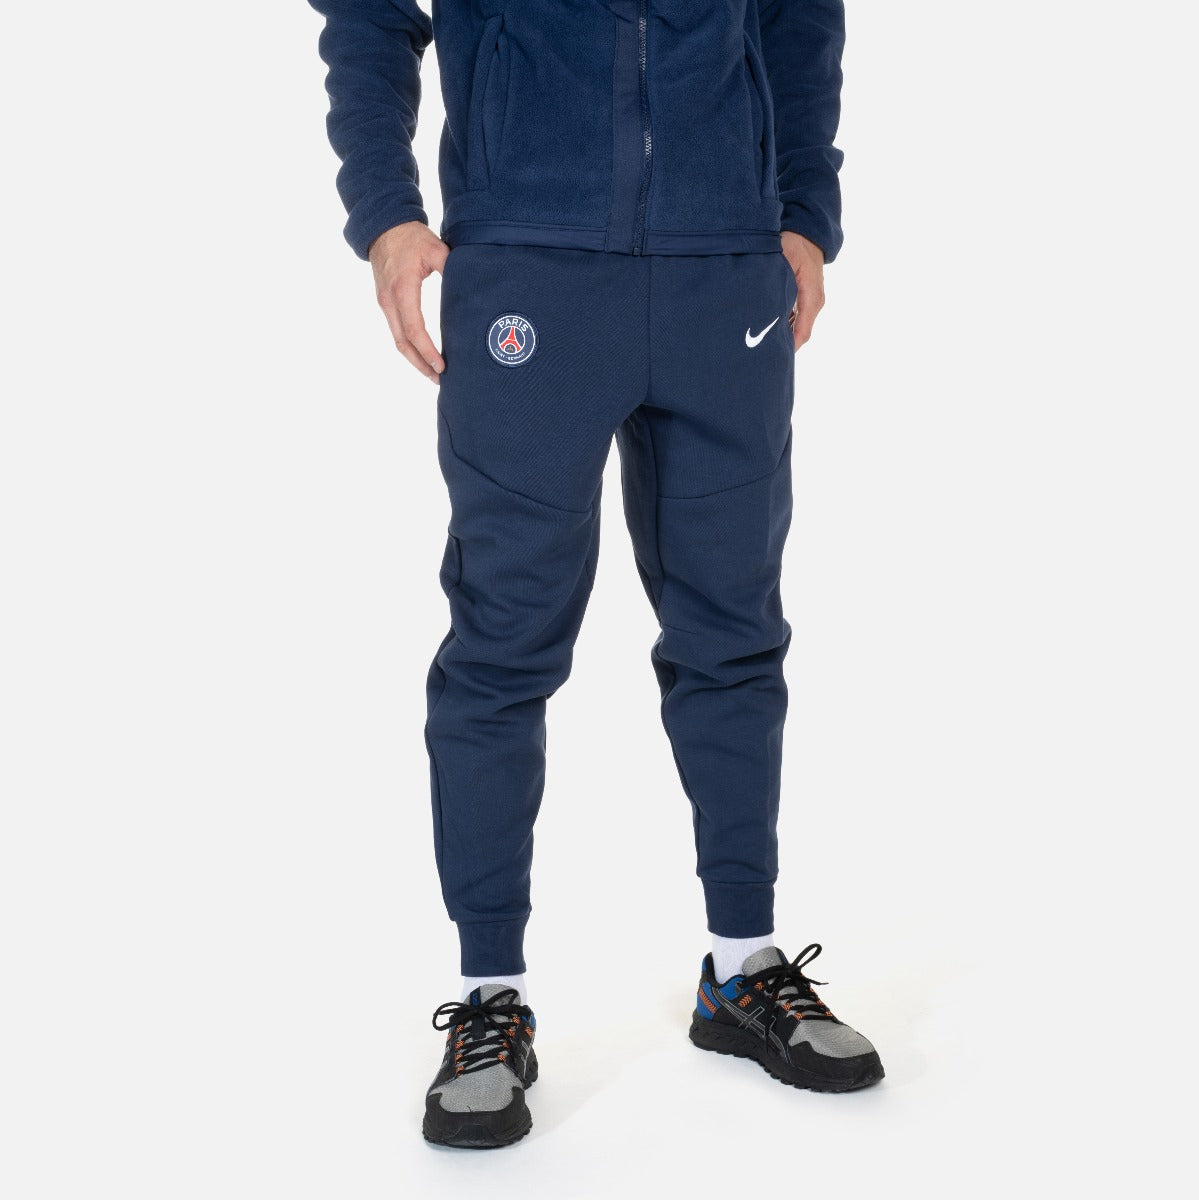 Nike Psg - Bleu - Short Homme